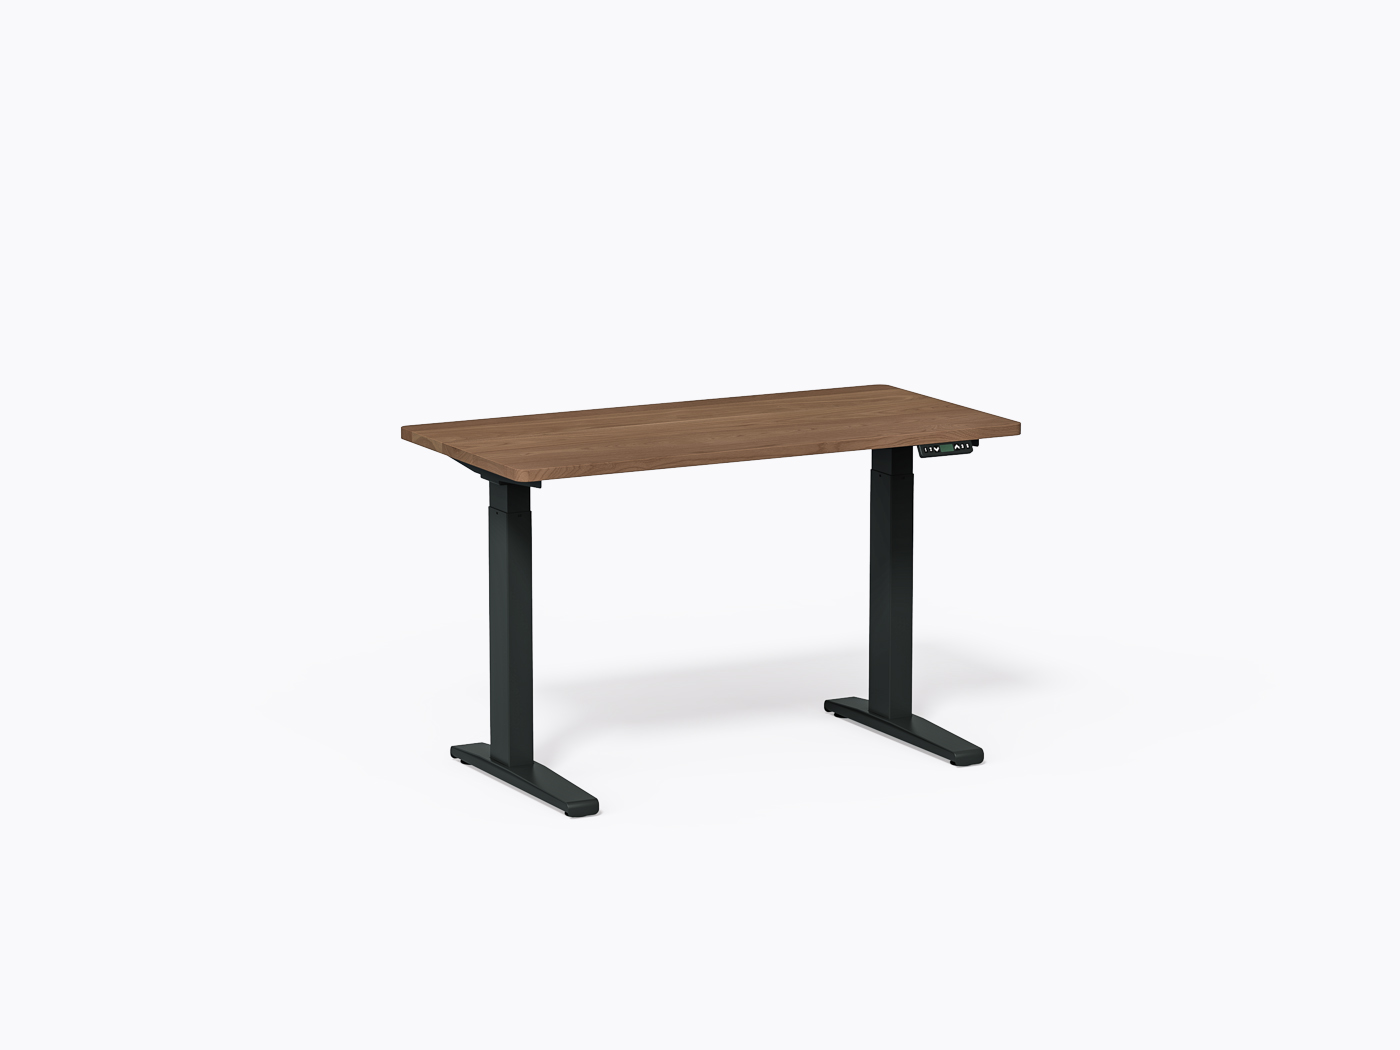 Gale Sit-to-stand Desk - 24" X 48" - Walnut